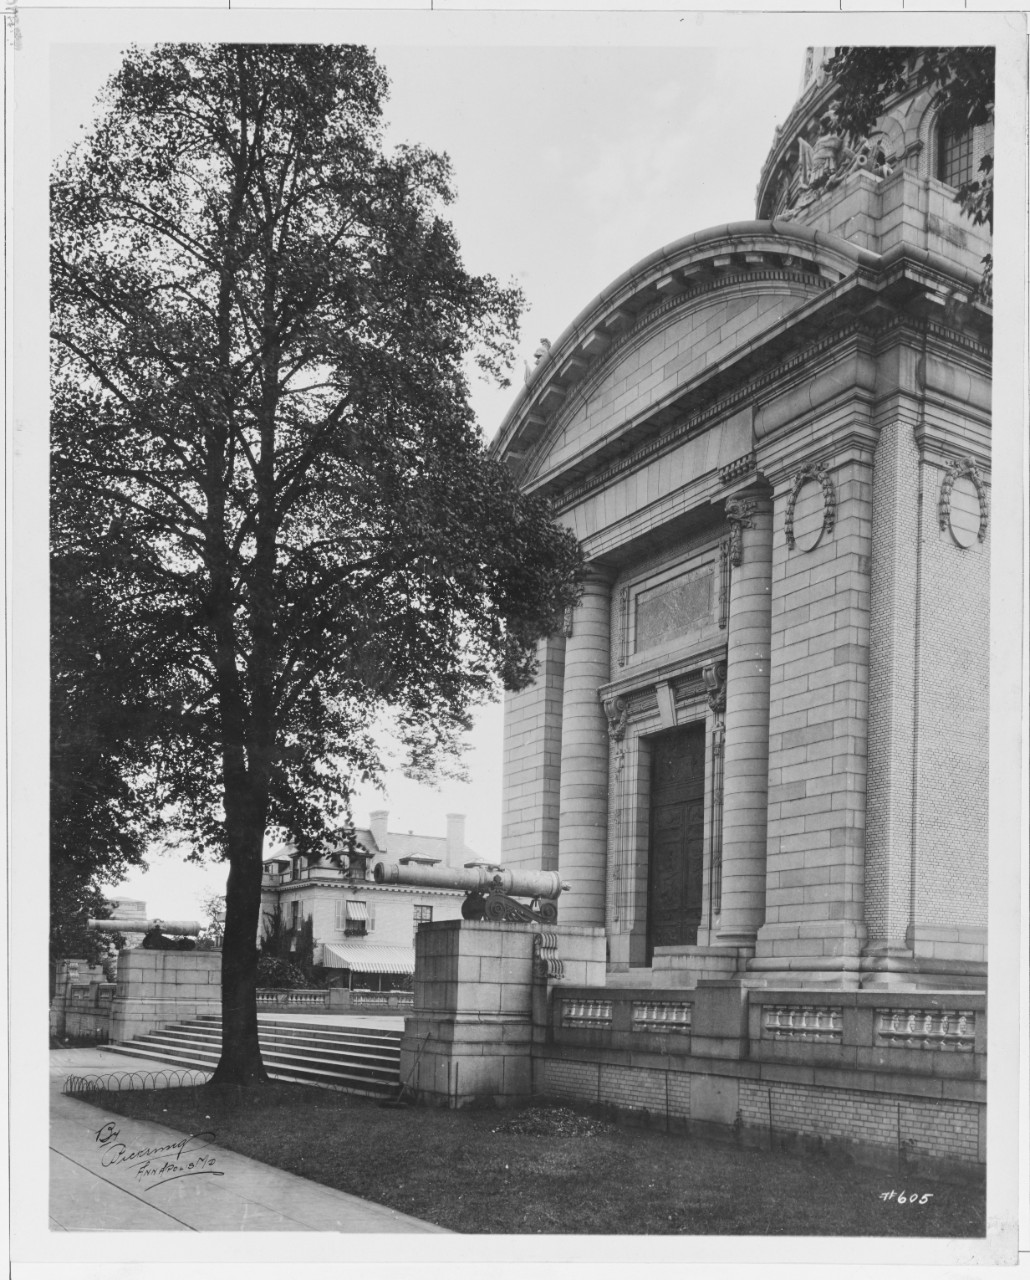 U.S. Naval Academy Chapel, Annapolis, Maryland, 1936